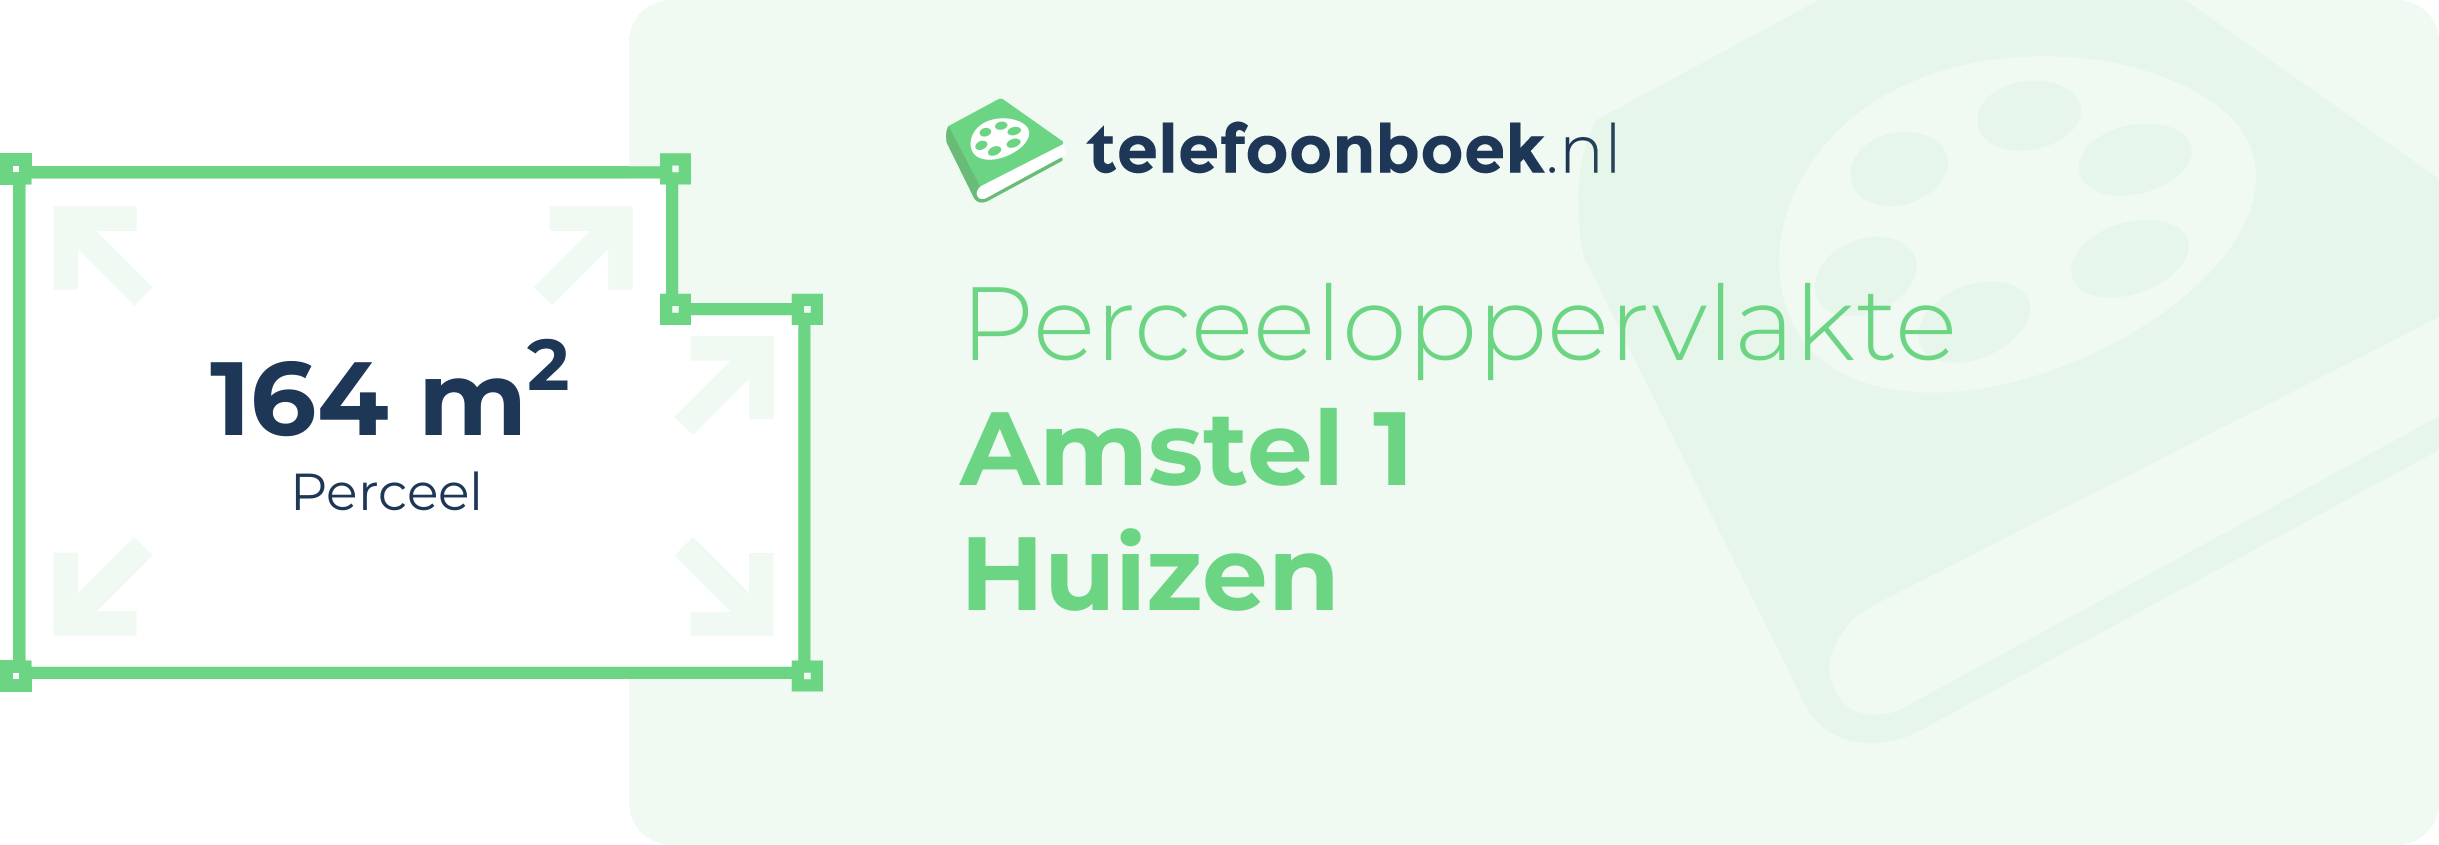 Perceeloppervlakte Amstel 1 Huizen